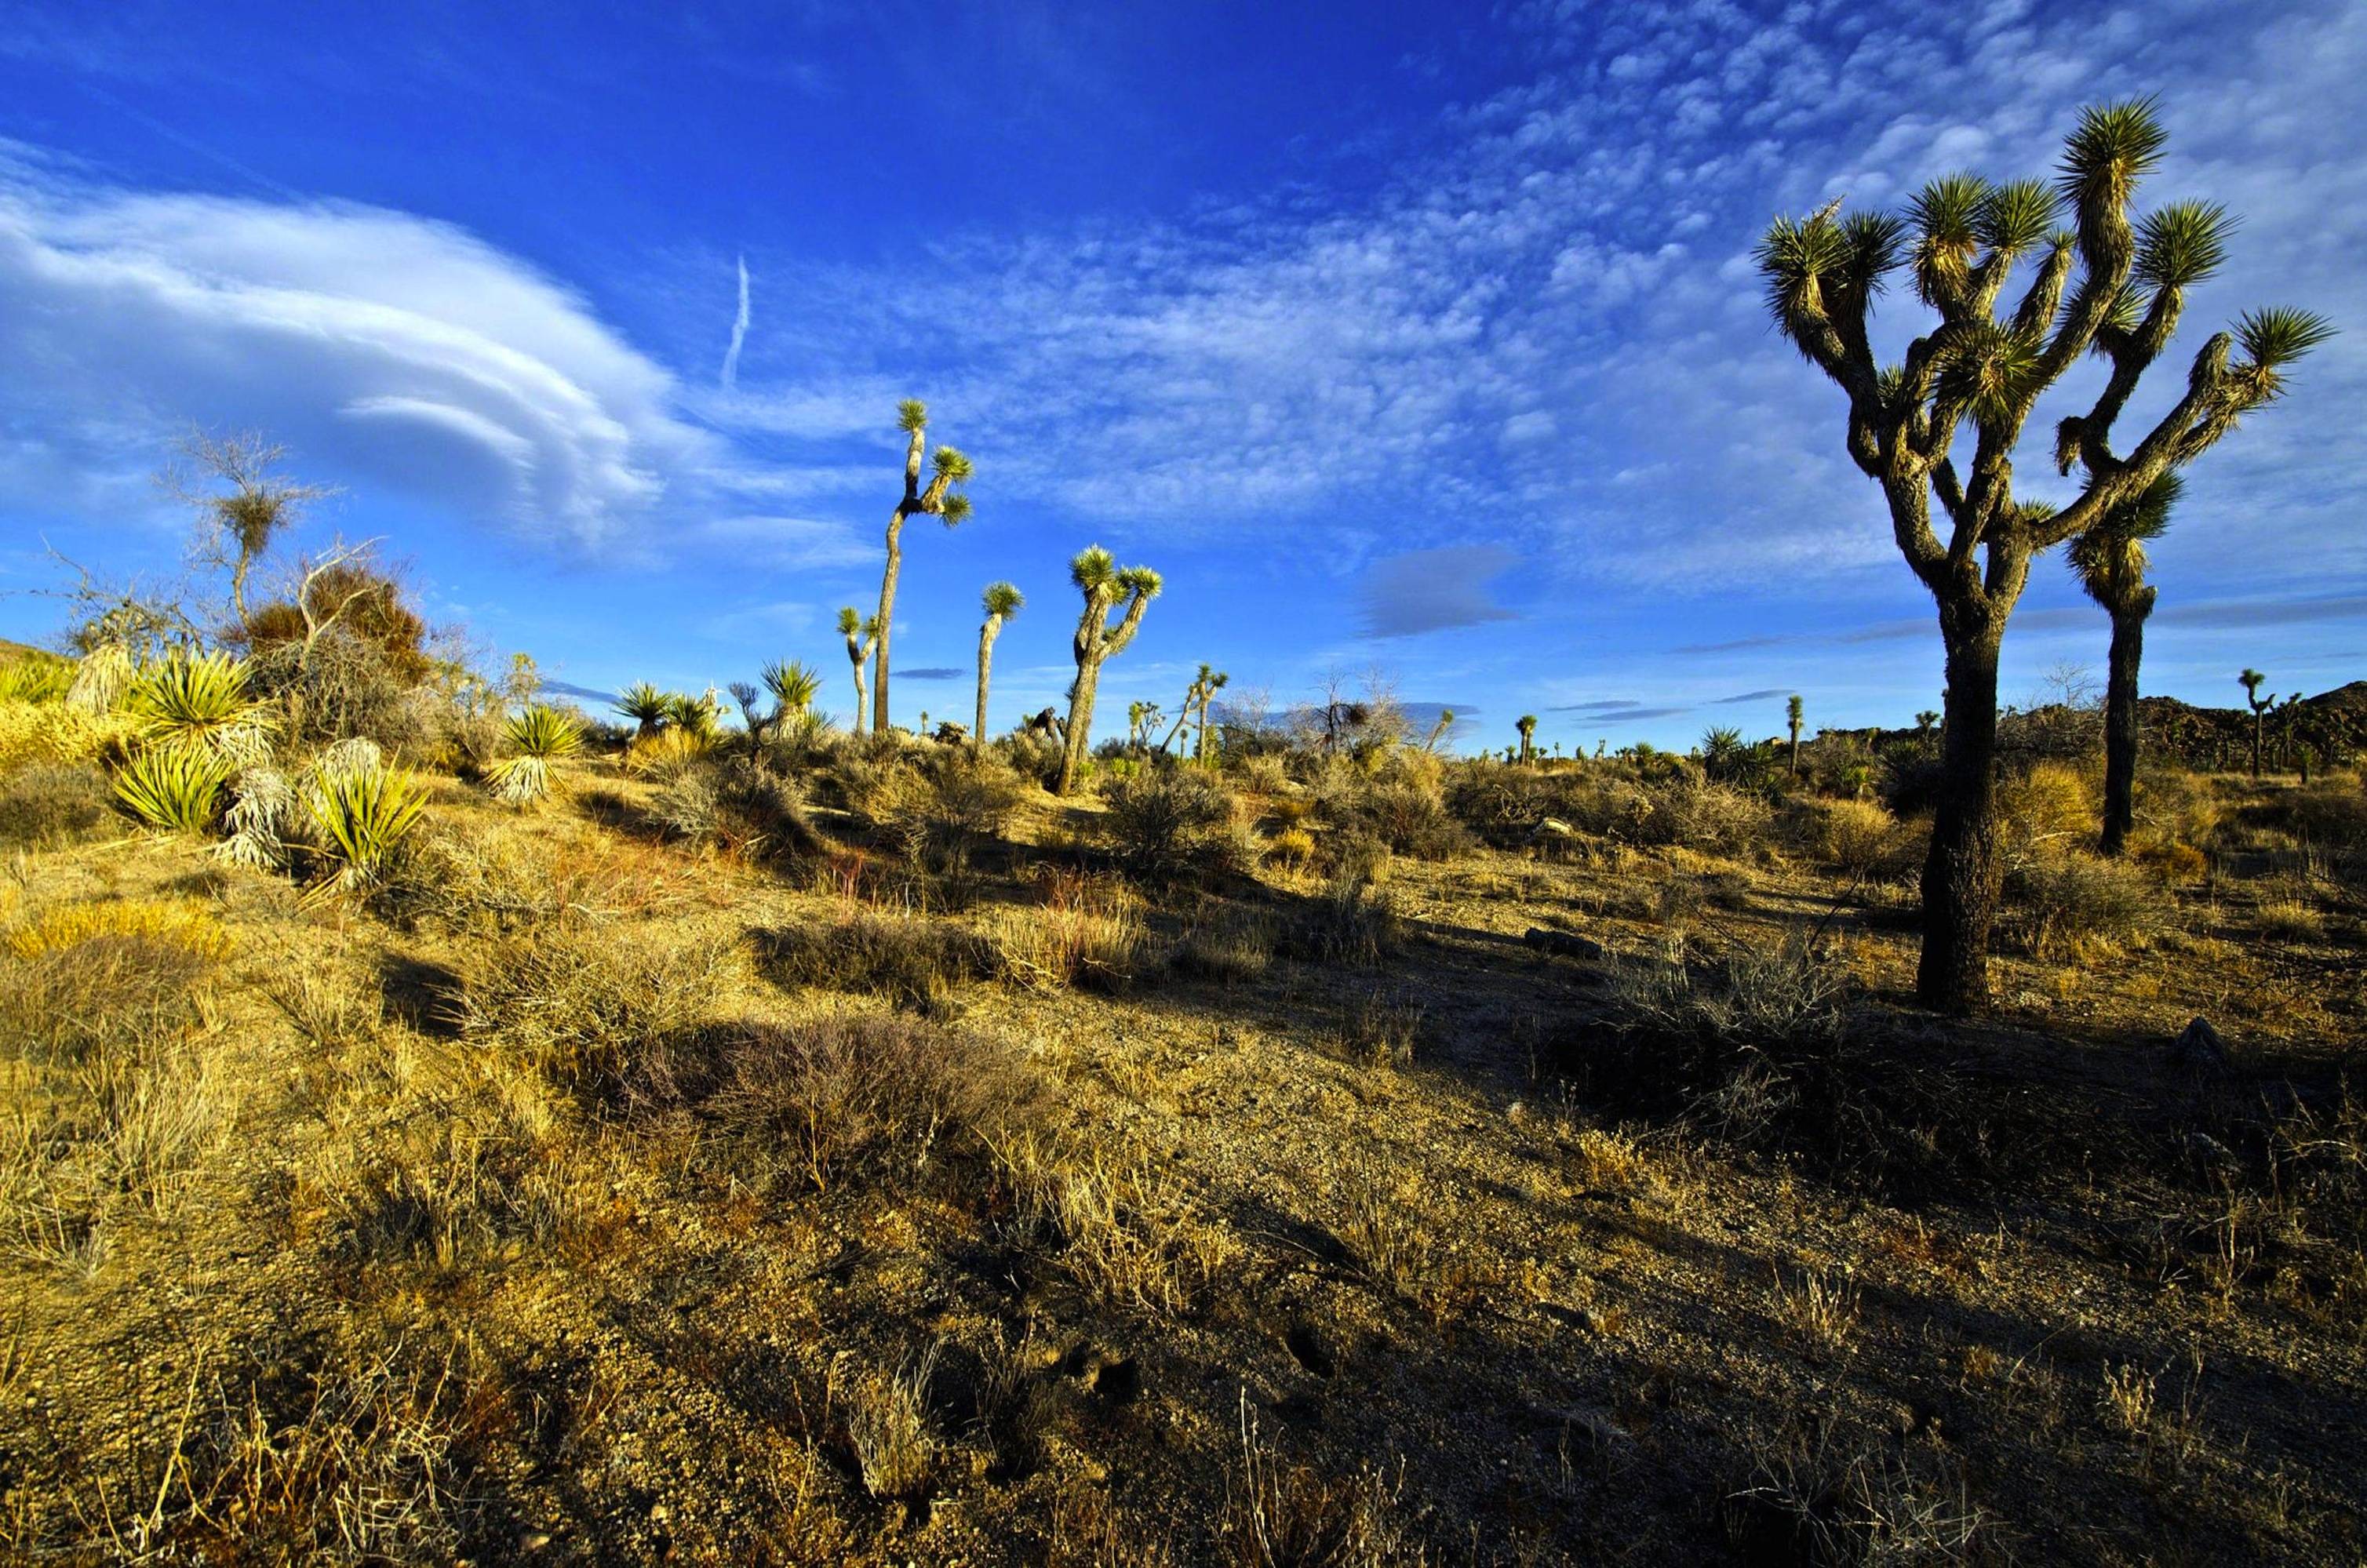 The Mojave Desert wilderness in Joshua Tree National Park HD Wallpapers